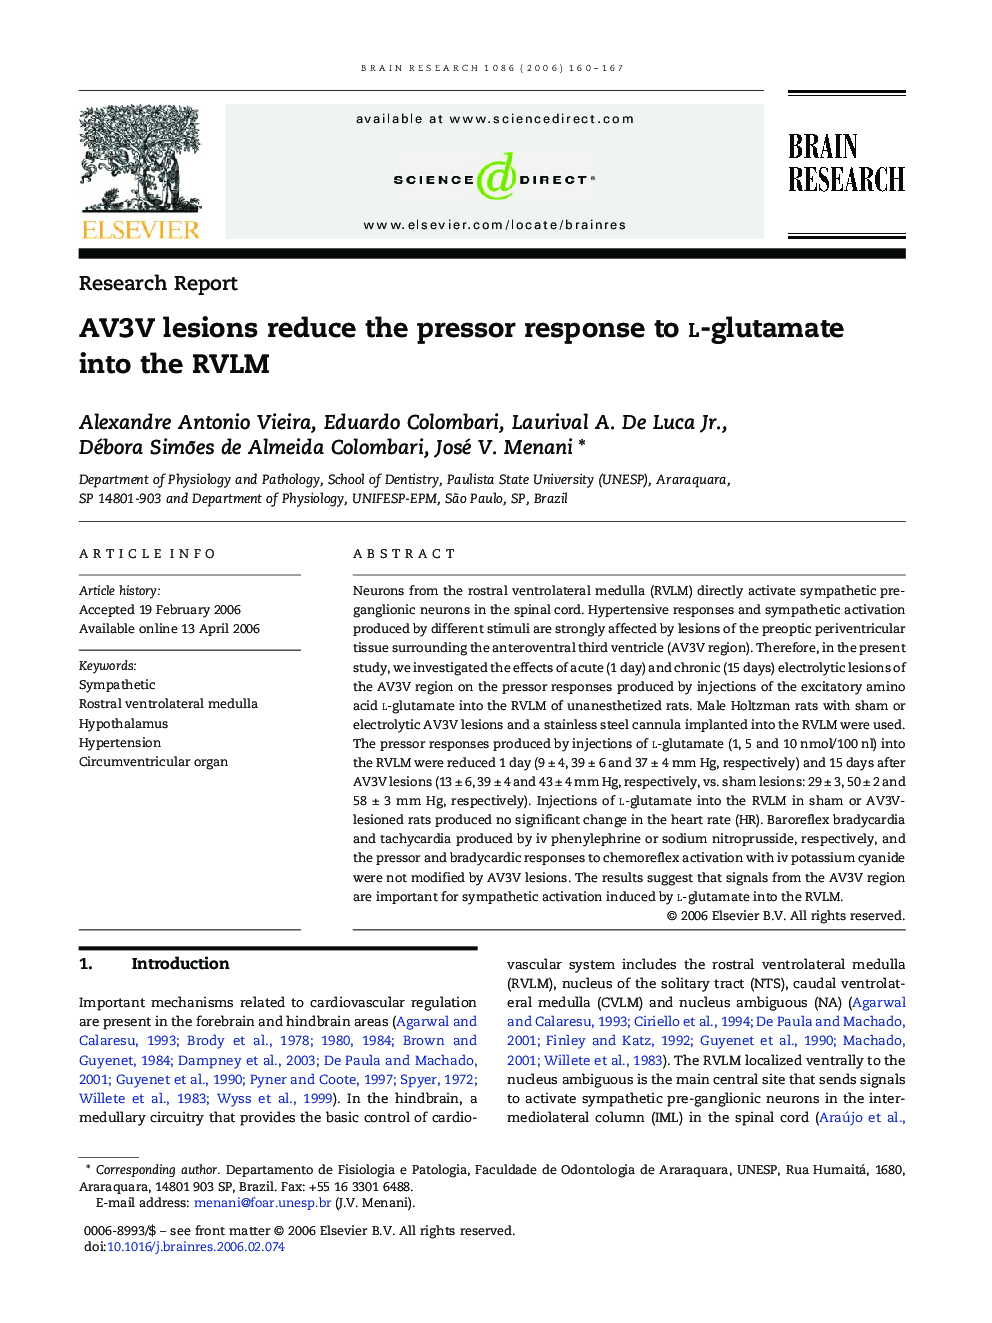 AV3V lesions reduce the pressor response to l-glutamate into the RVLM